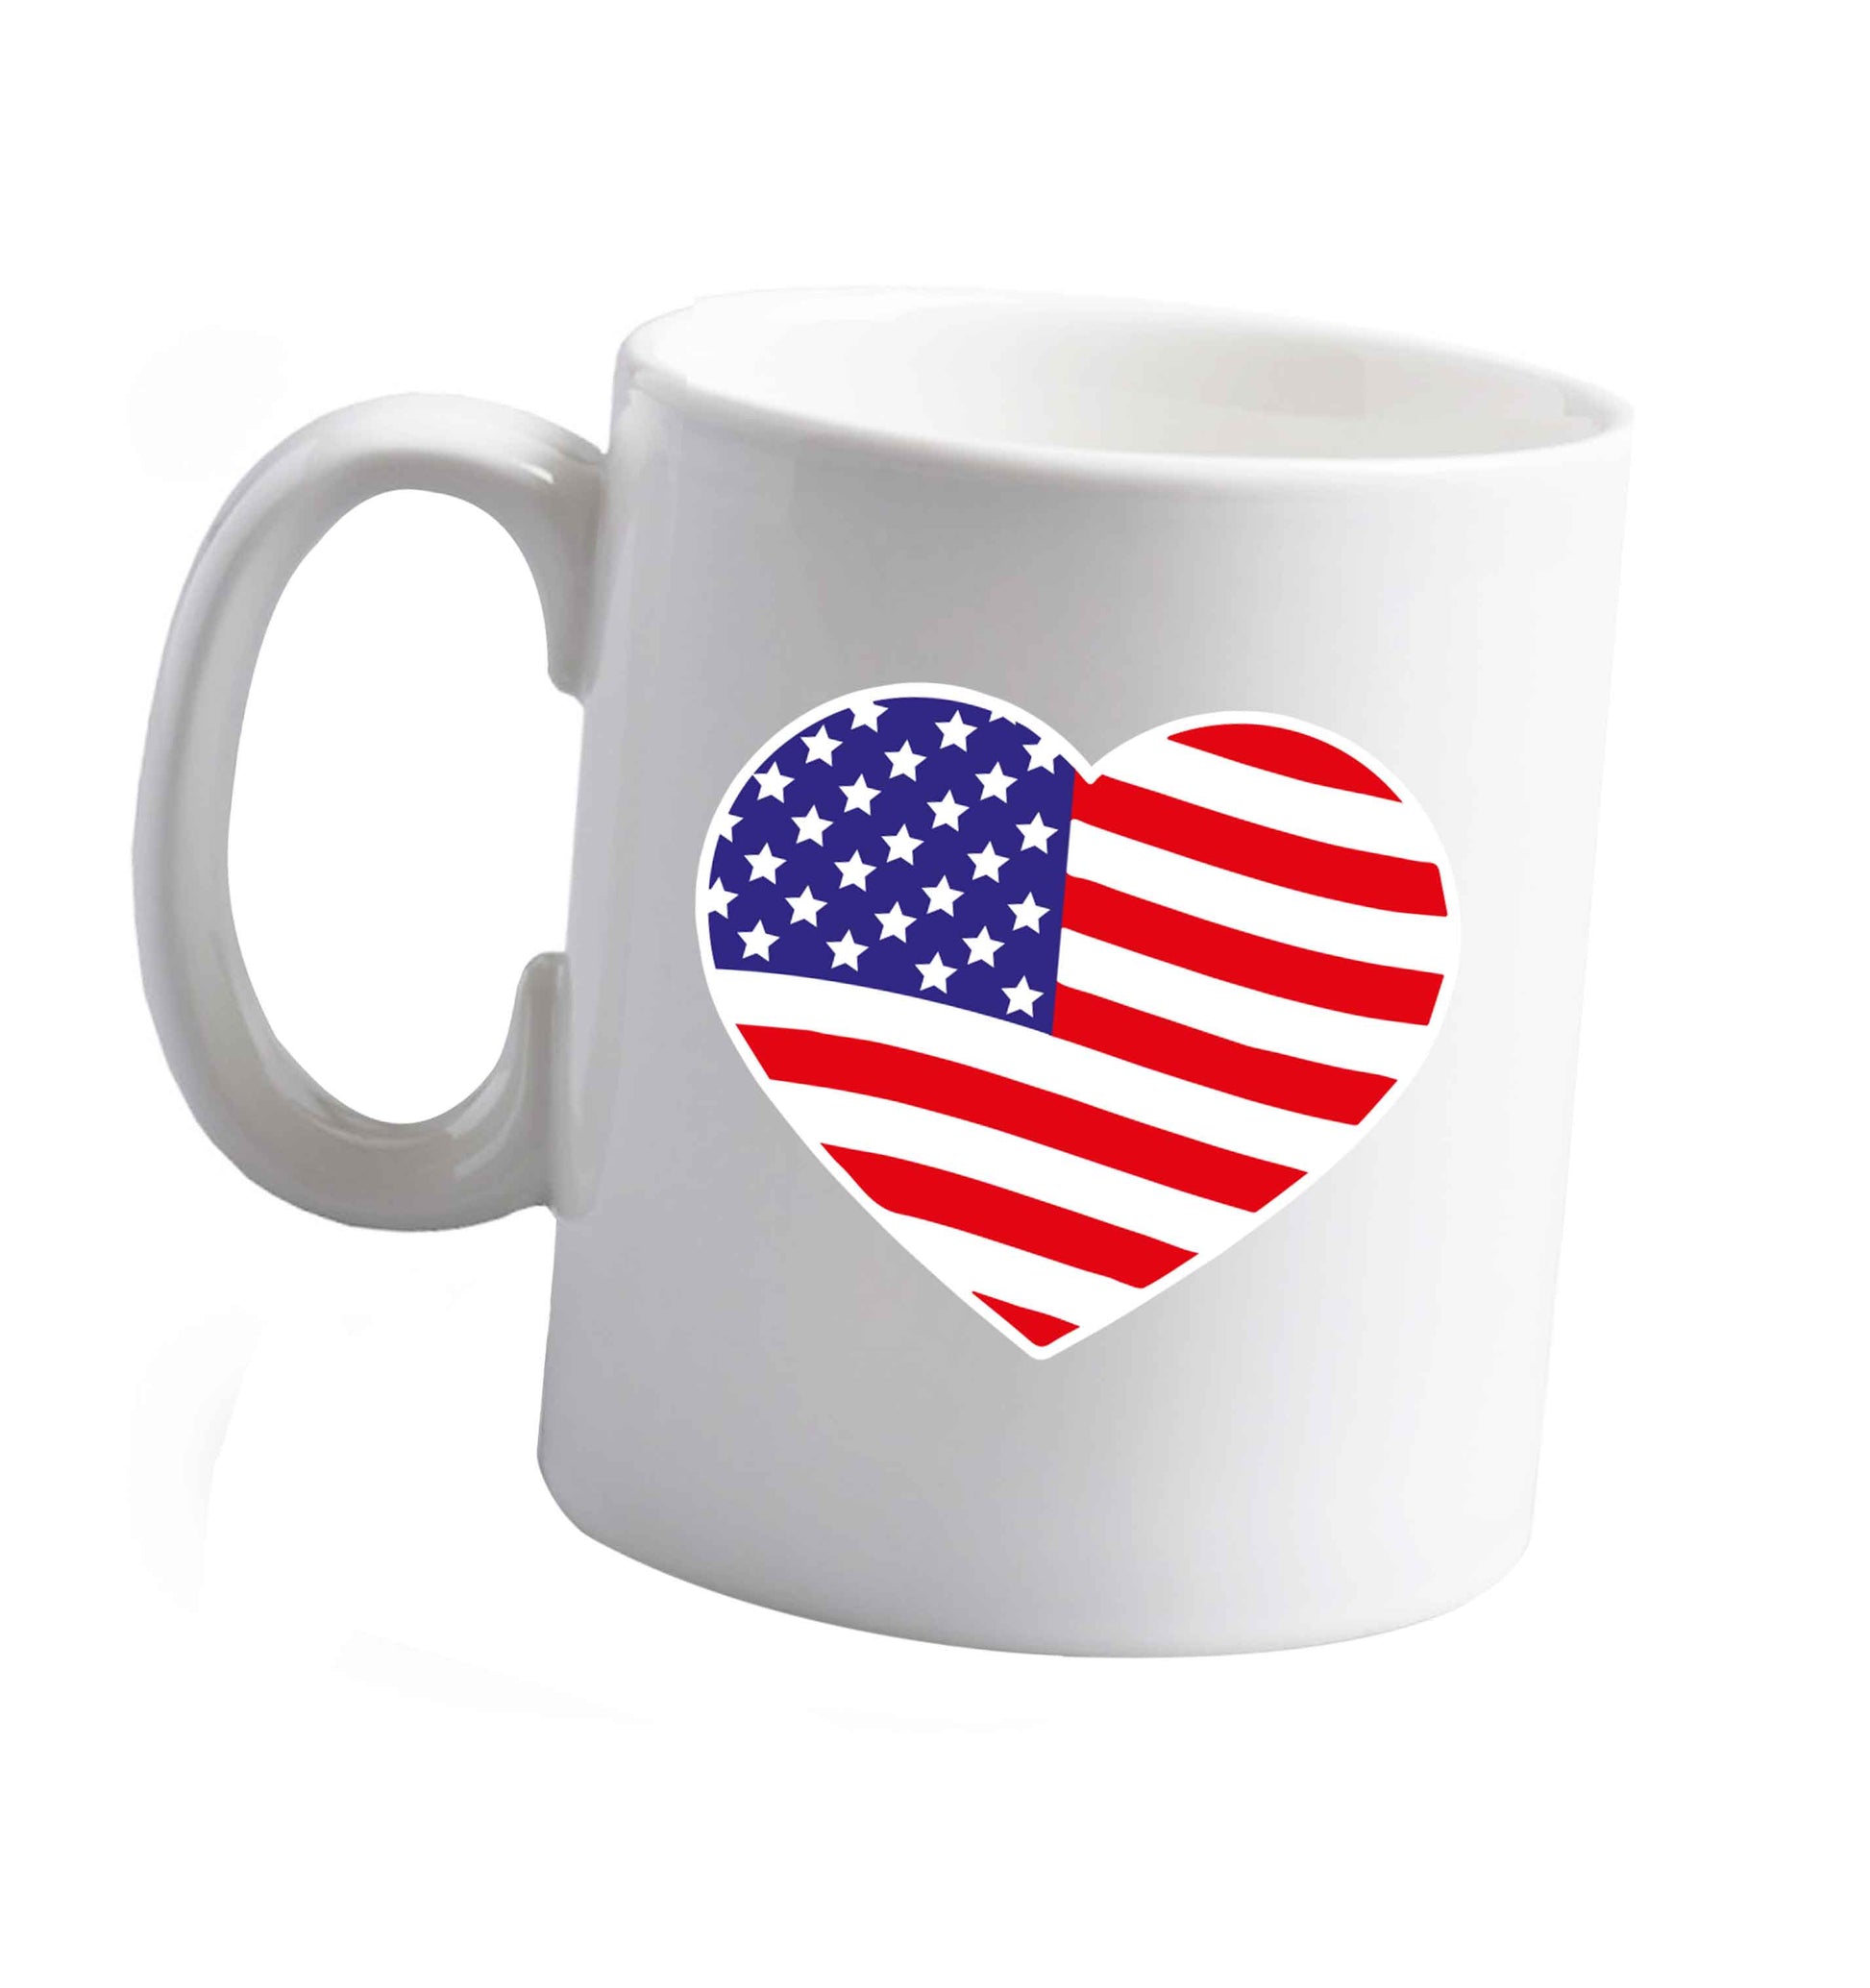 10 ozAmerican USA Heart Flag ceramic mug right handed